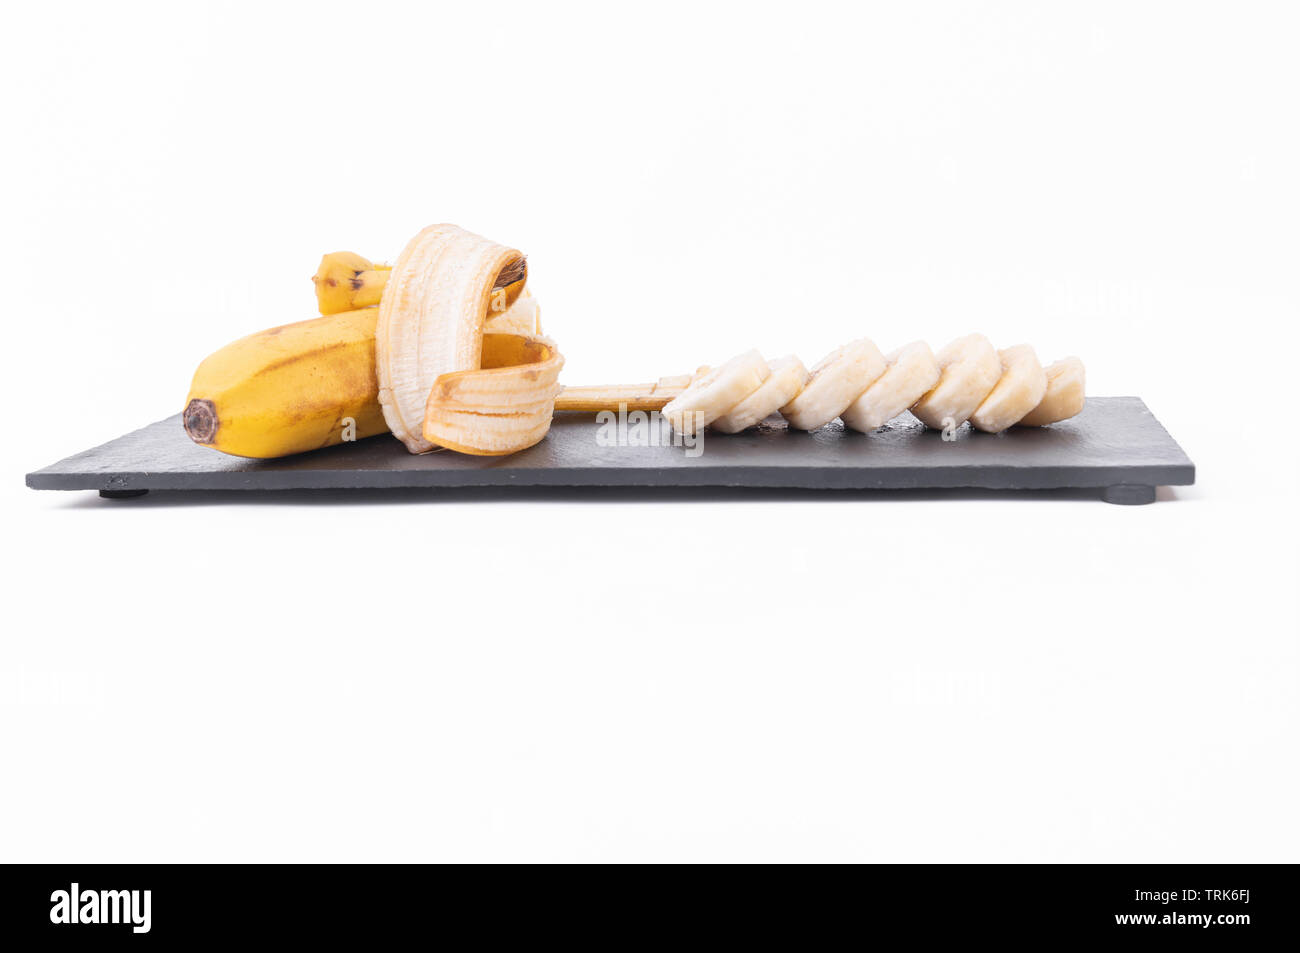 Sliced peeled banana, knife, chopping board. On white background Stock Photo